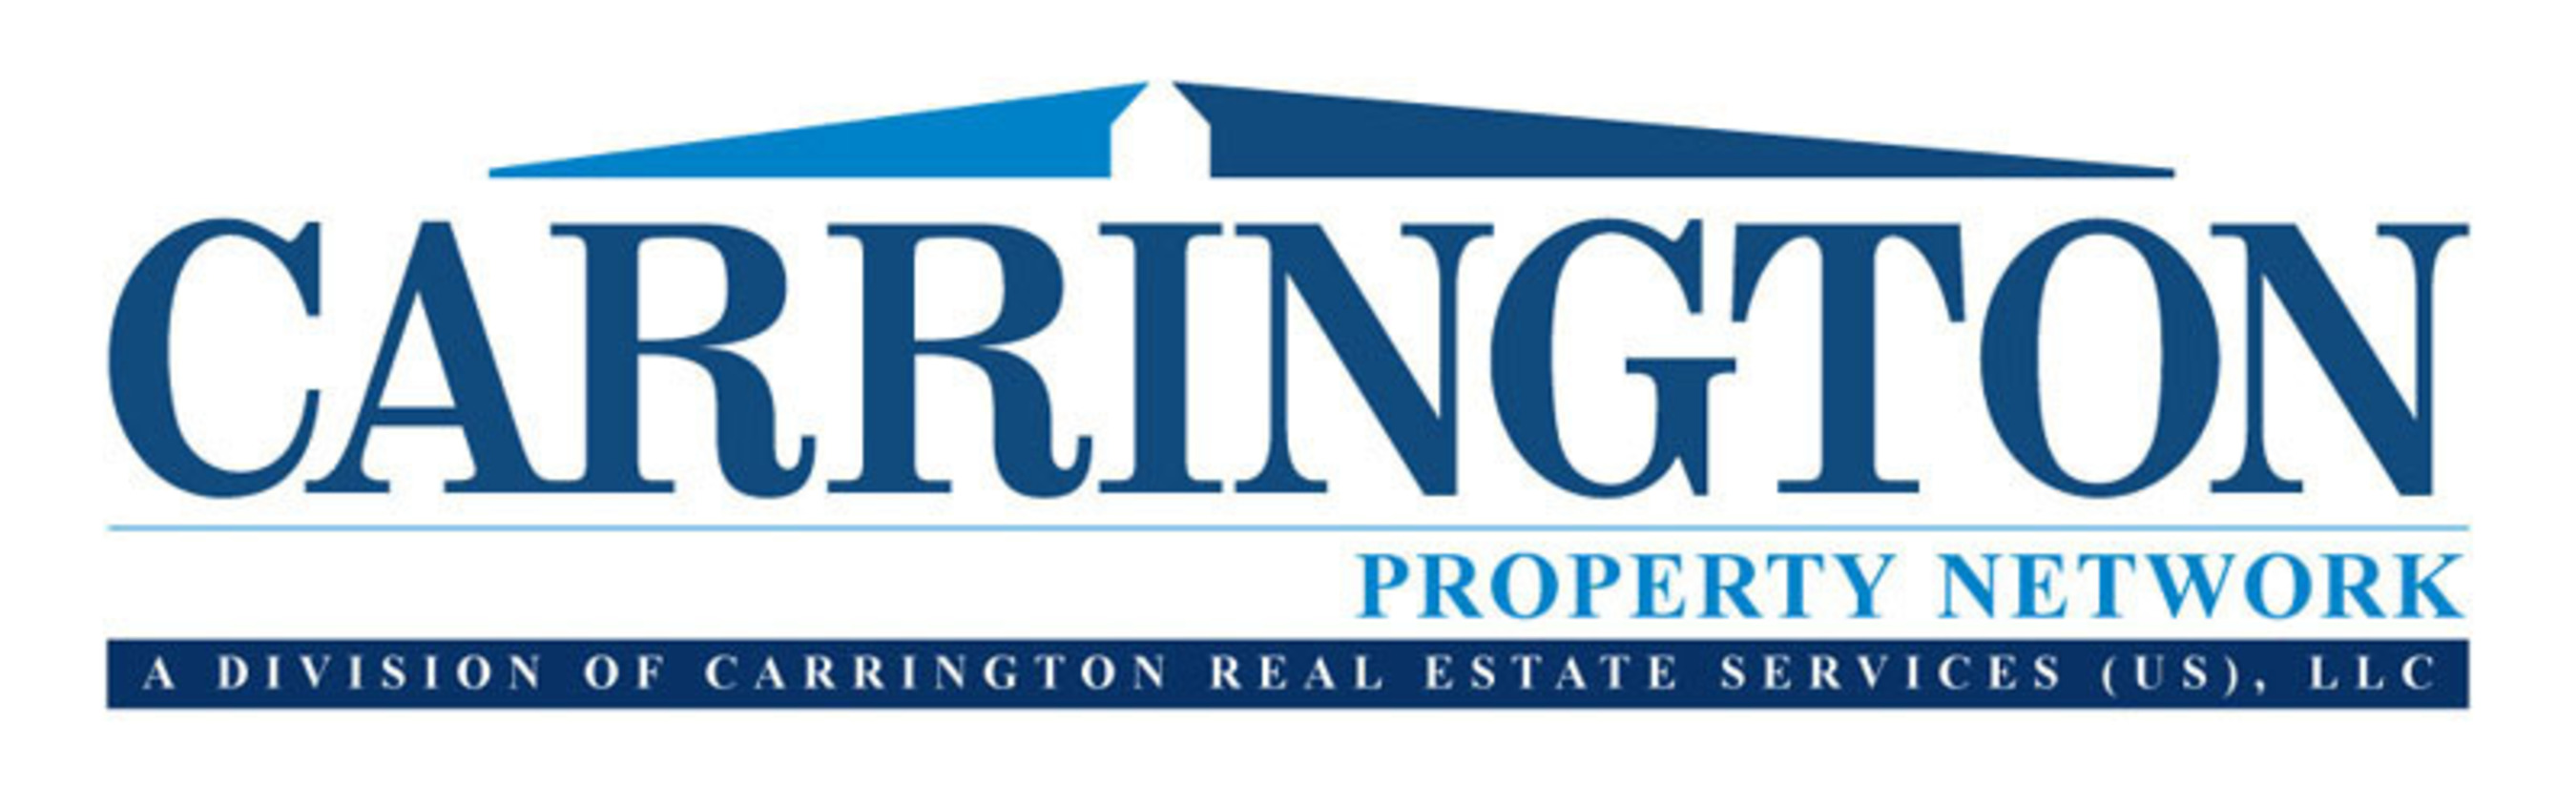 Carrington Property Network Logo. (PRNewsFoto/Carrington Property Network) (PRNewsFoto/CARRINGTON PROPERTY NETWORK)